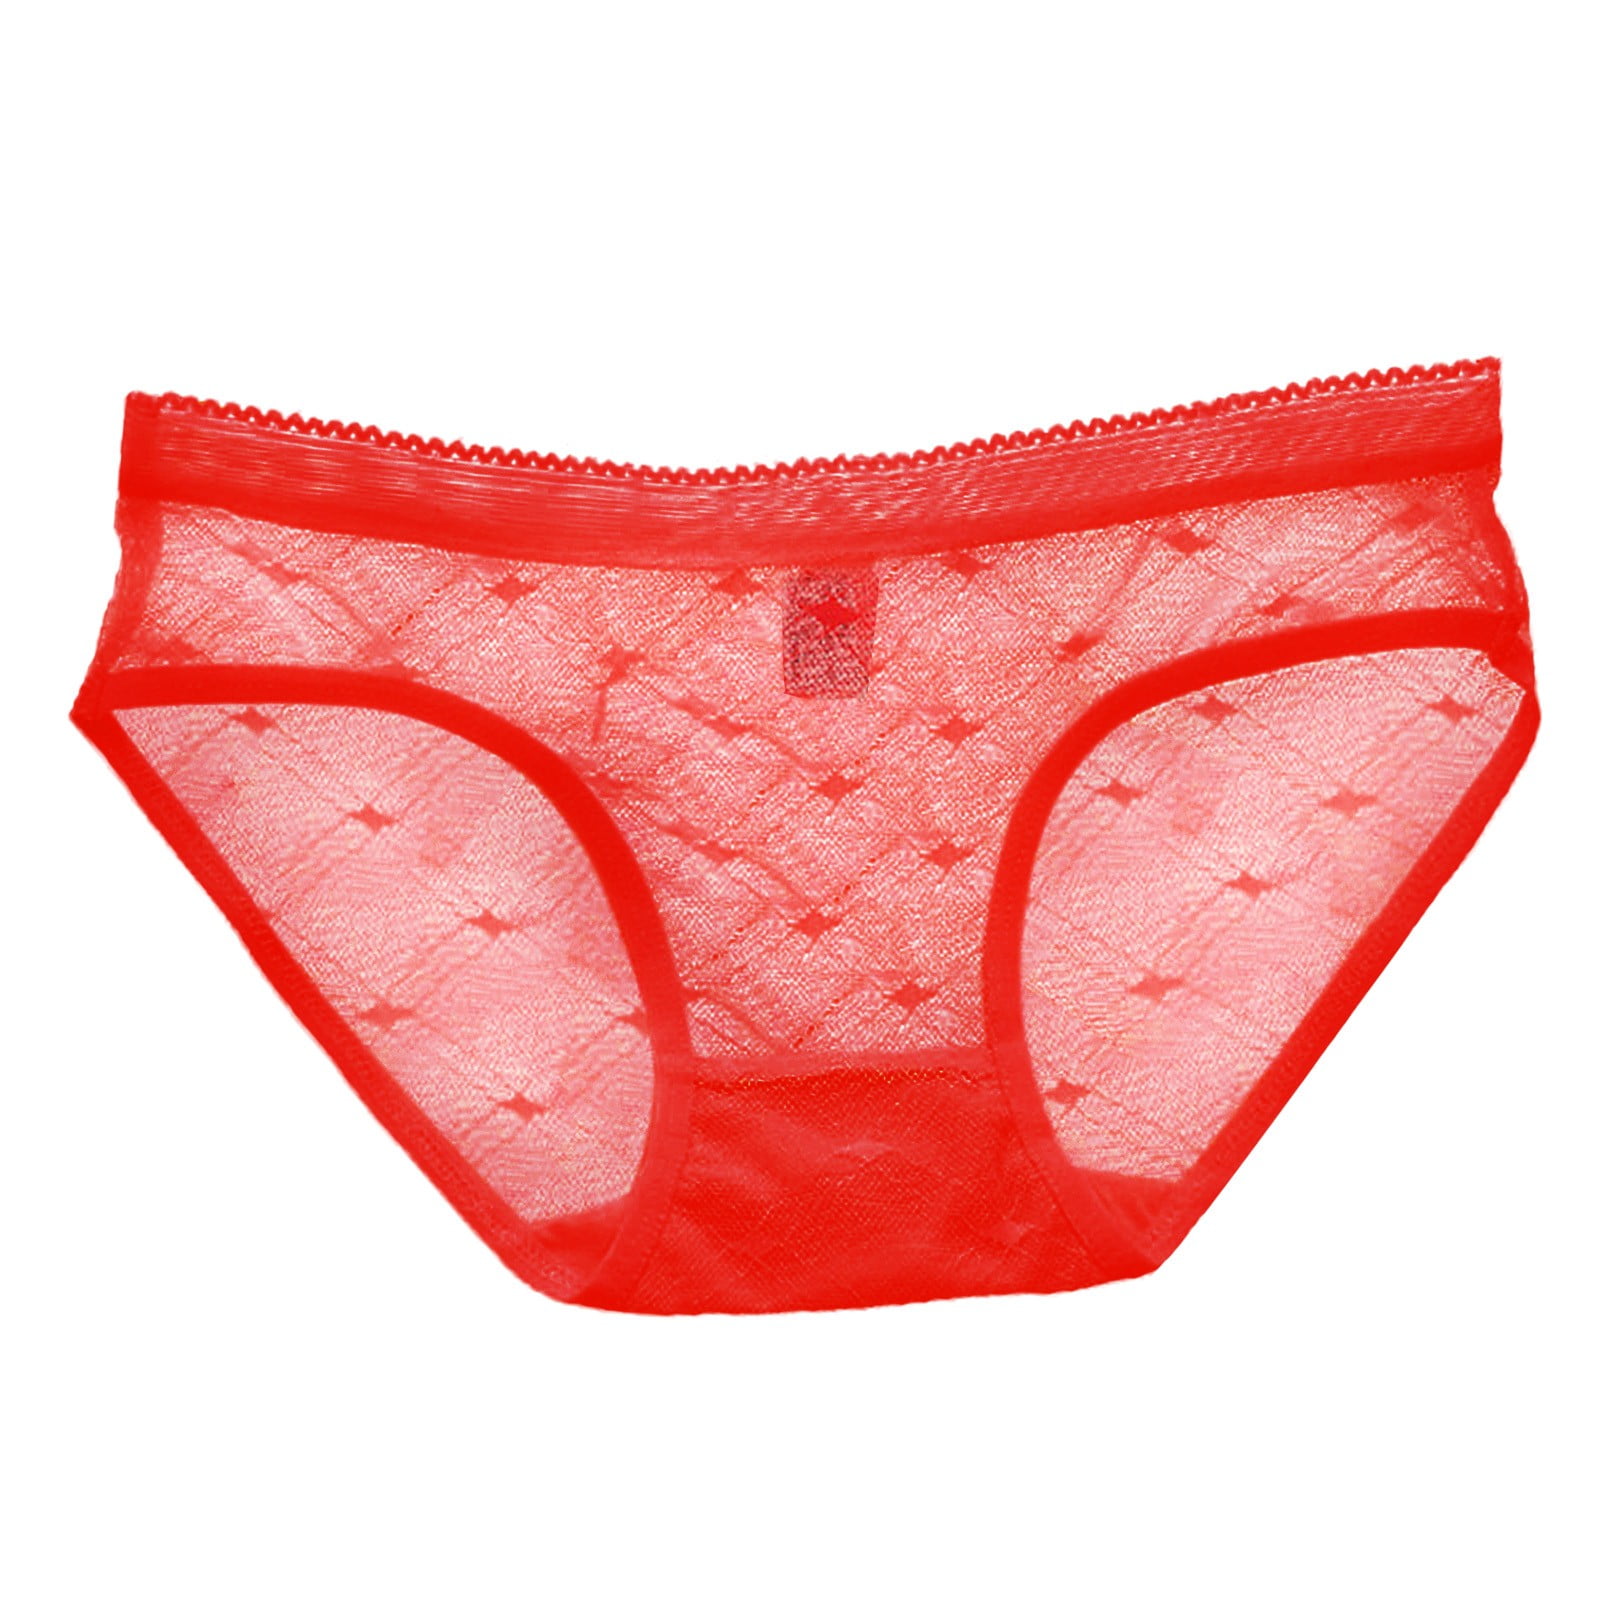 Underwear Women Sheer Lace See Through Mesh Cotton Crotch Seamless